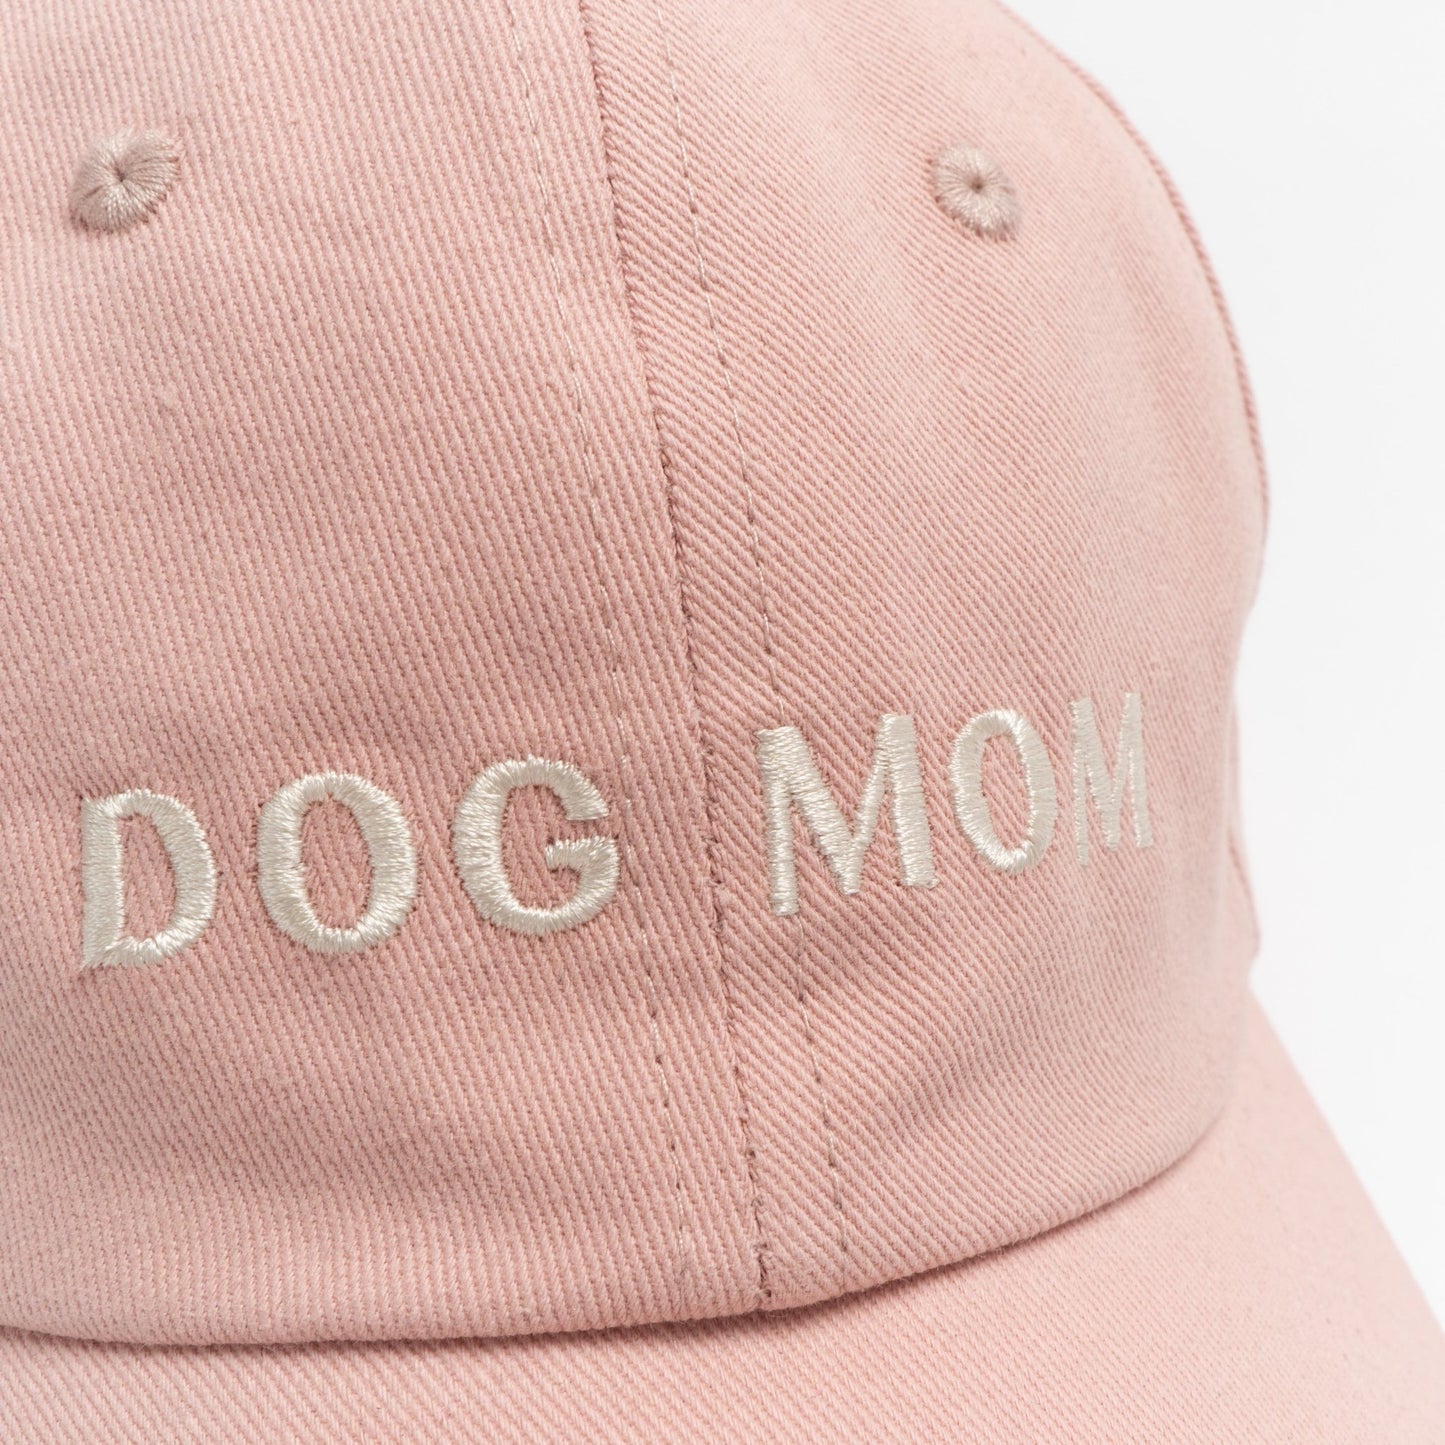 Blush Dog Mom Hat